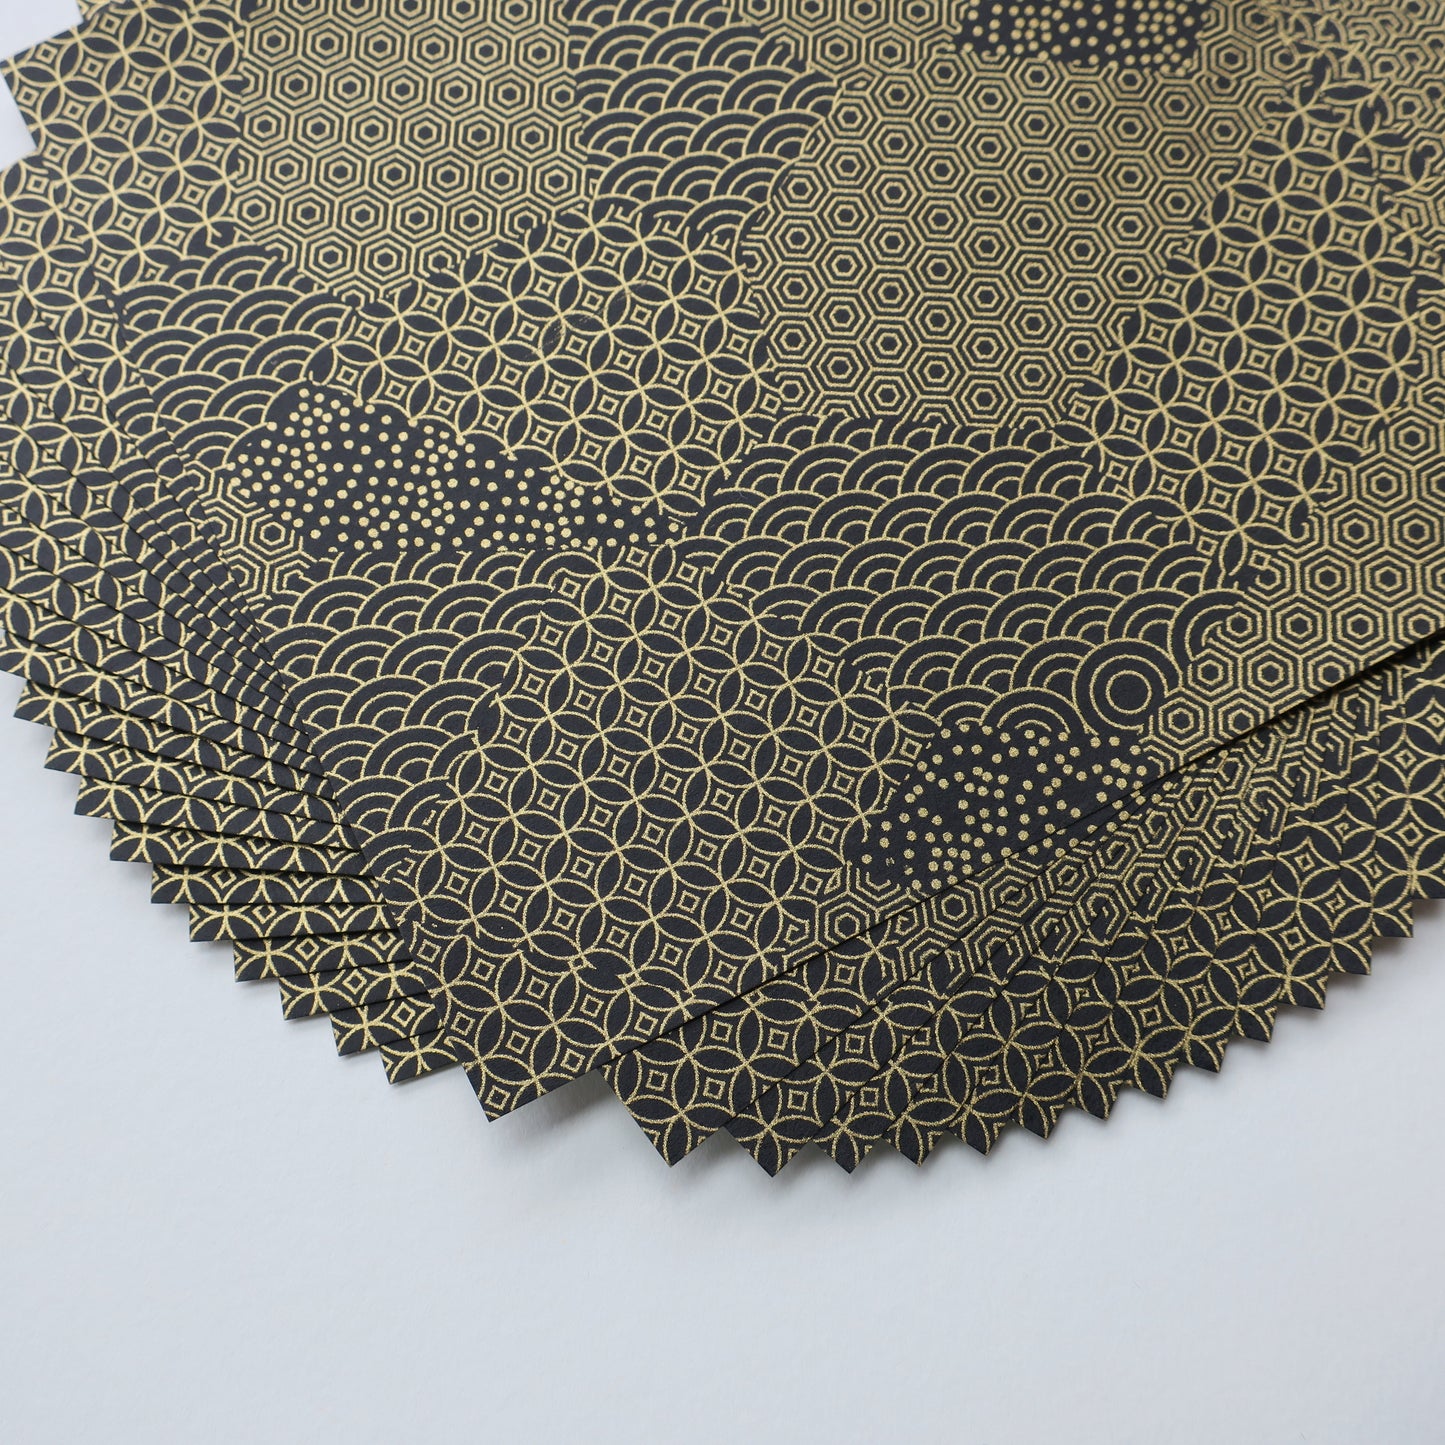 Pack of 20 Sheets 14x14cm Yuzen Washi Origami Paper HZ-496 - Black Gold Mixed Geometric Patterns